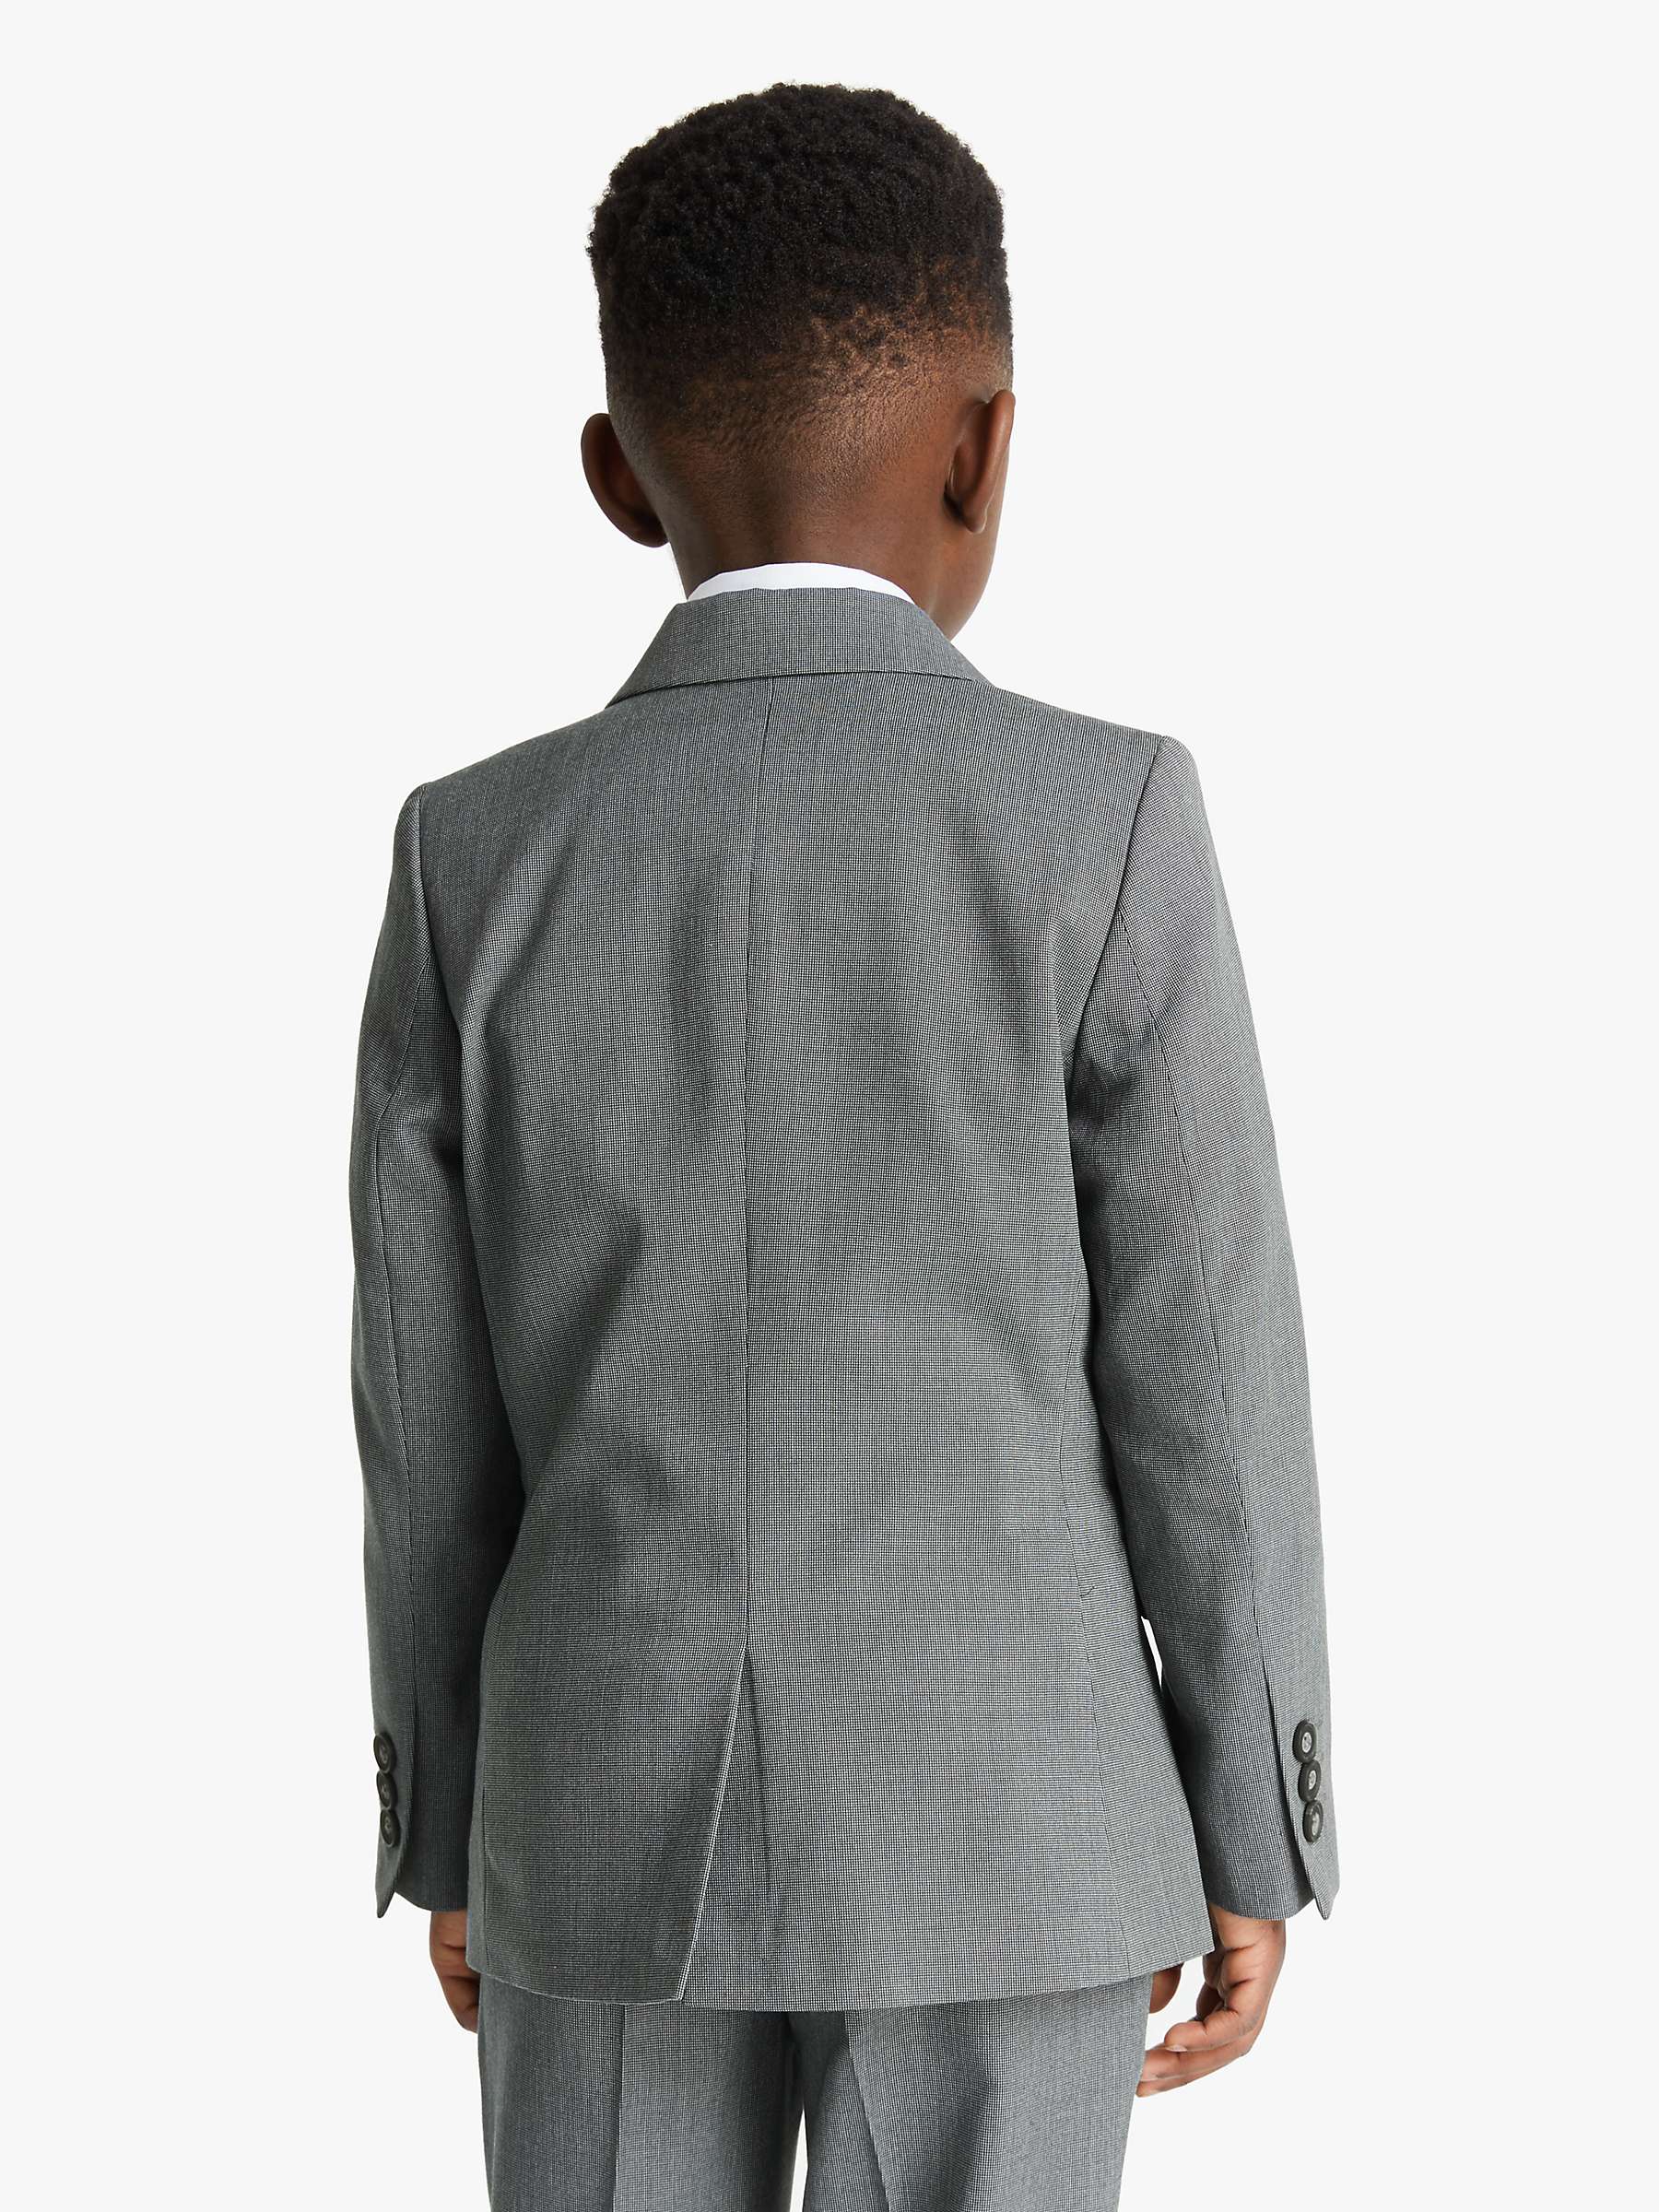 Buy John Lewis Heirloom Collection Kids' Suit Jacket, Grey Online at johnlewis.com